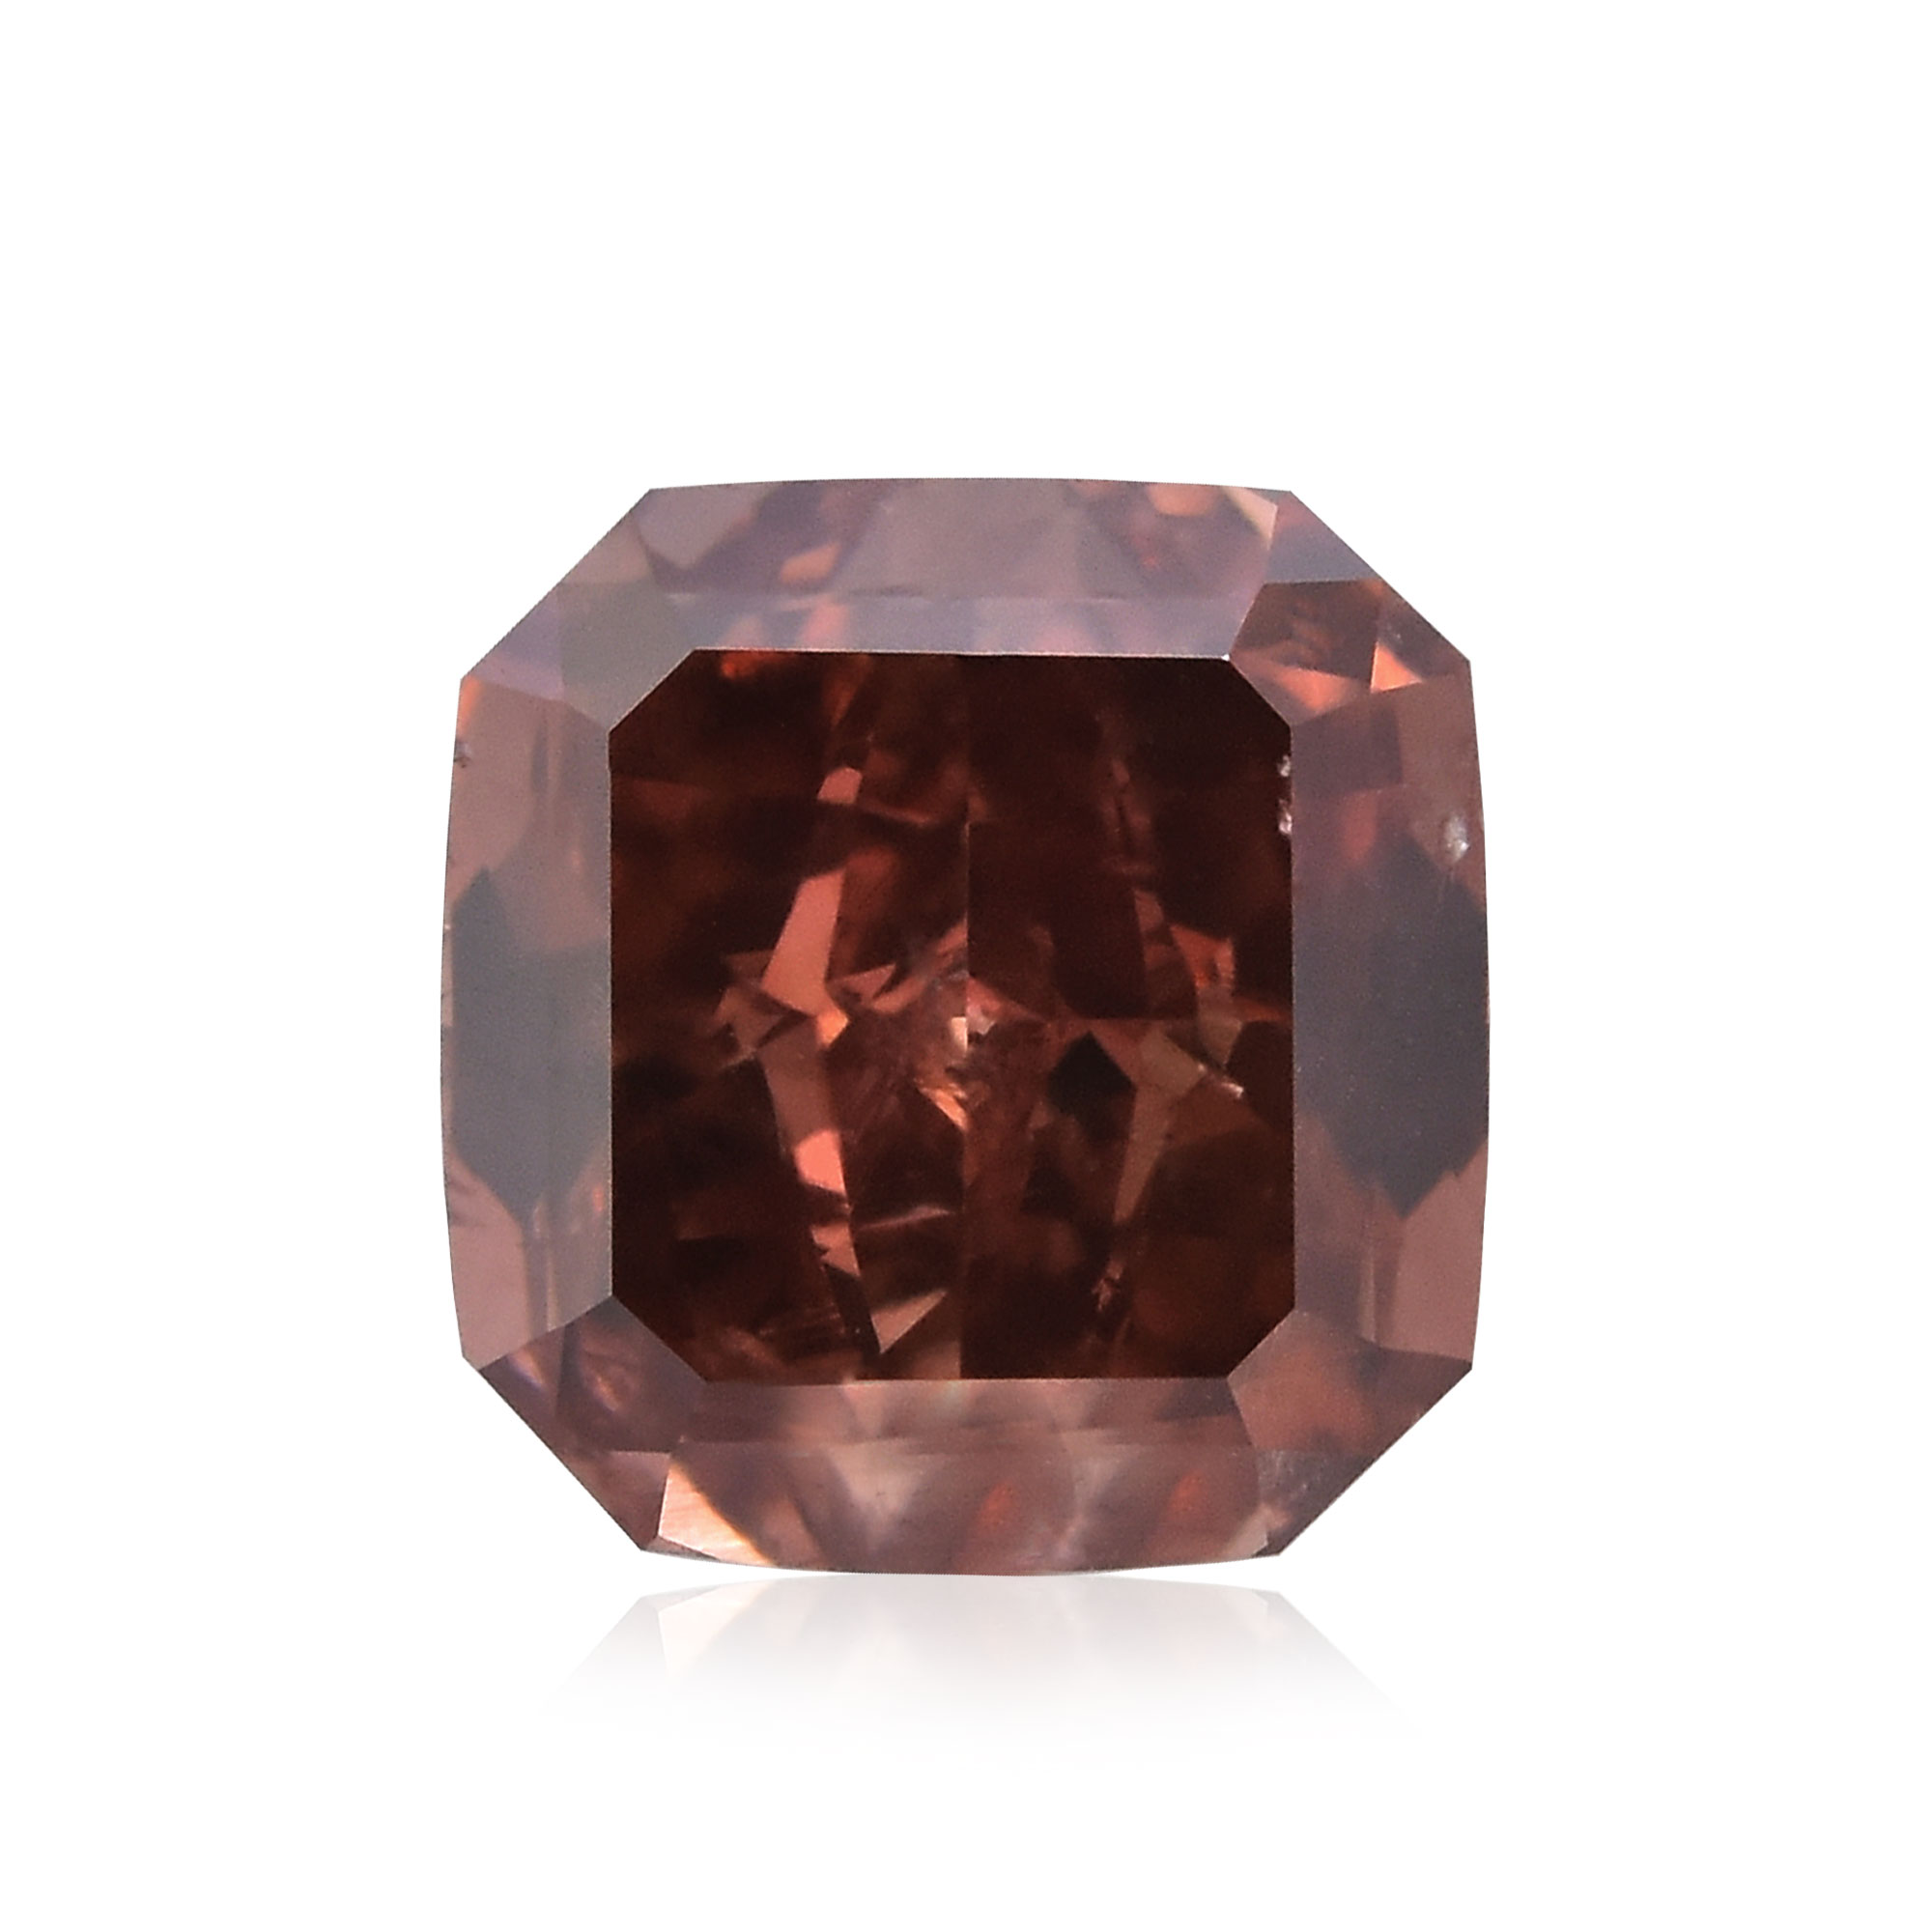 0.55 carat, Fancy Deep Brownish Orangy Pink Diamond, Radiant